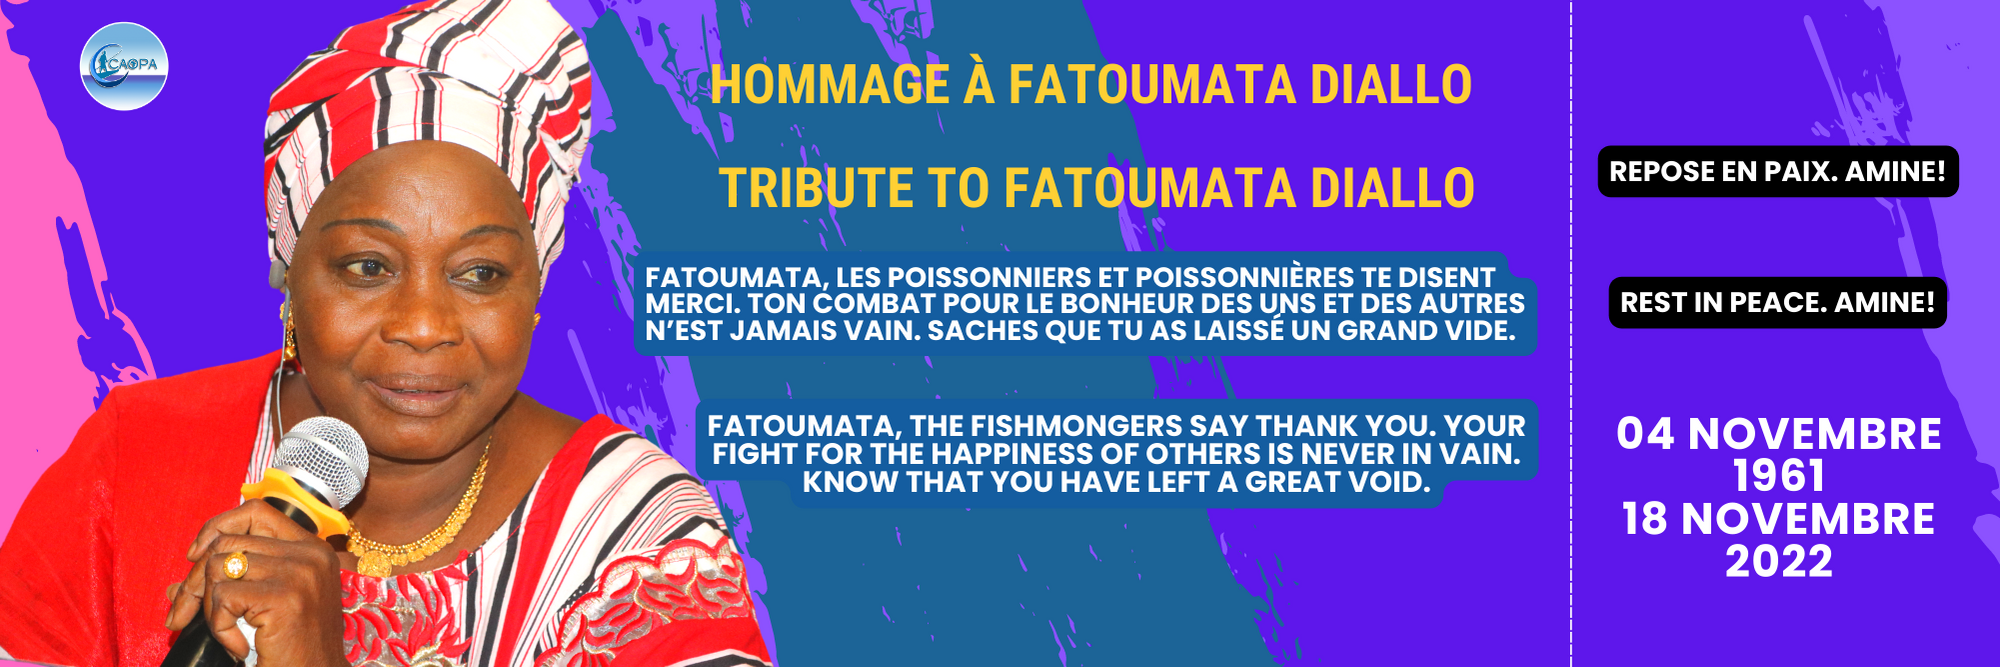 Hommage à Fatoumata DIALLO banderole